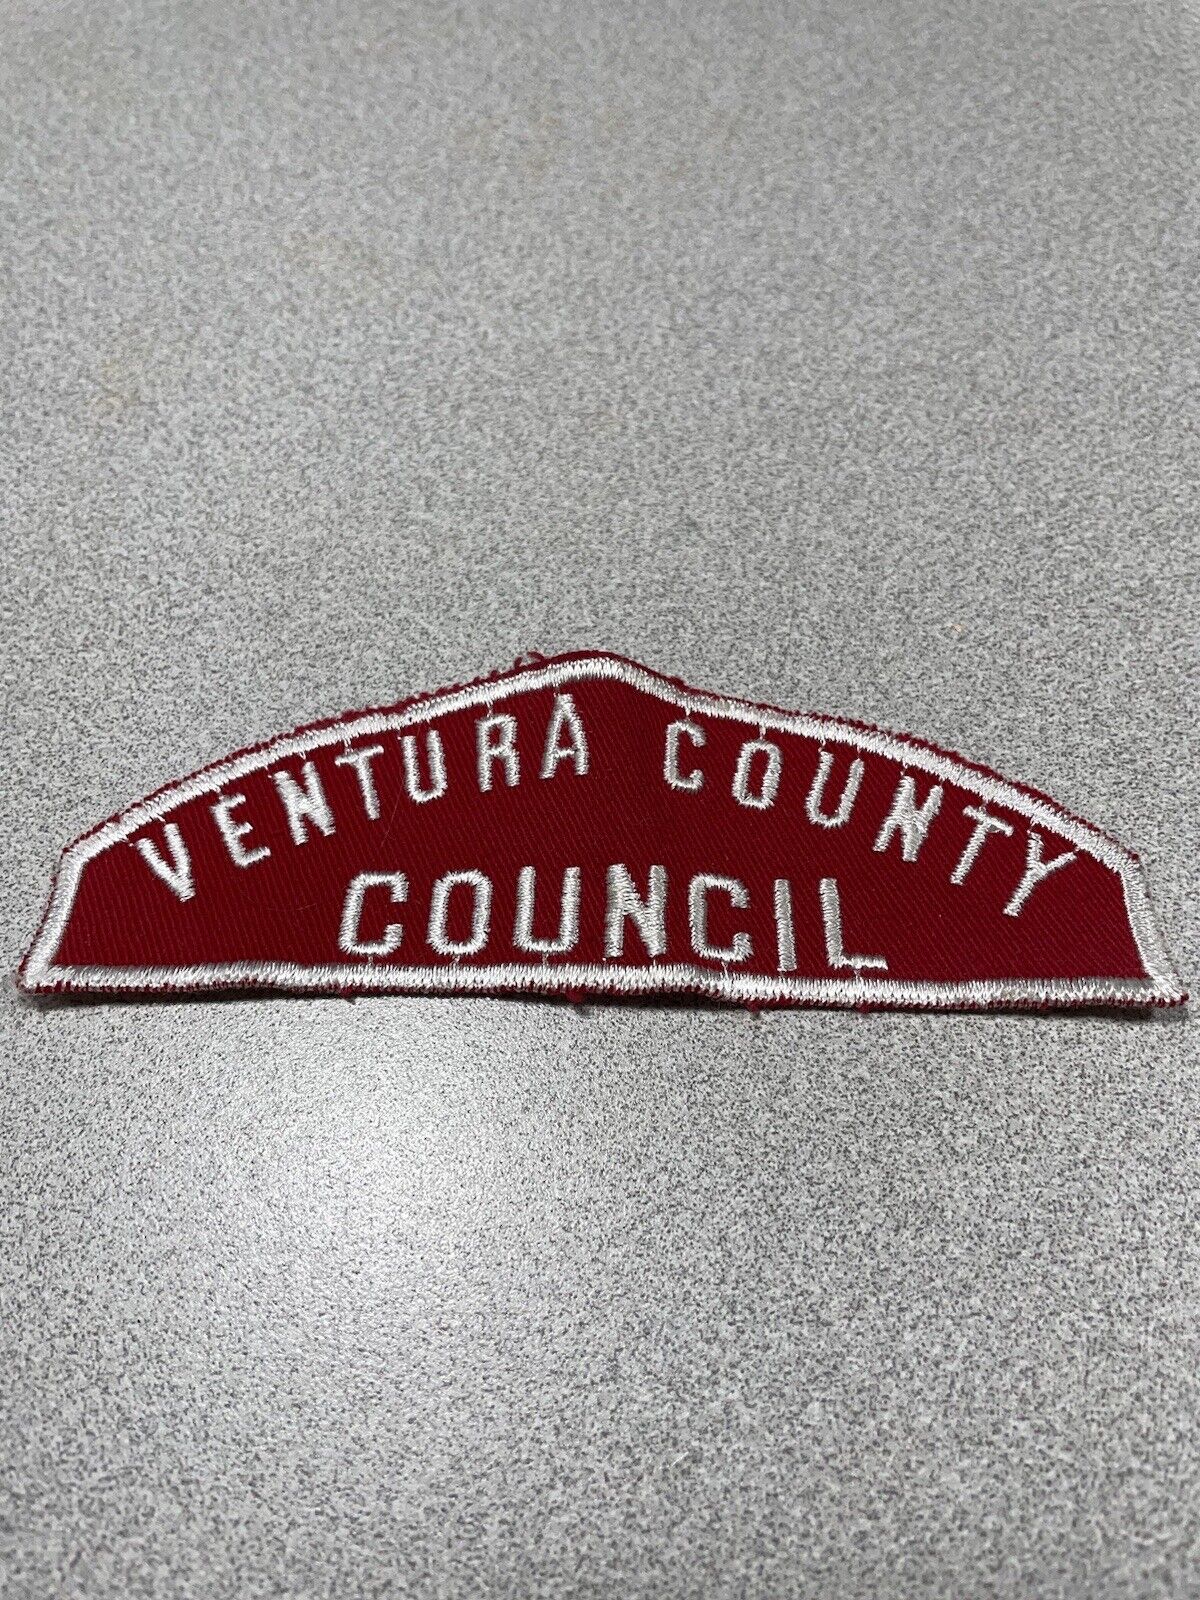 Vintage Ventura County Council Boy Scout Red & White Strip Patch CSP